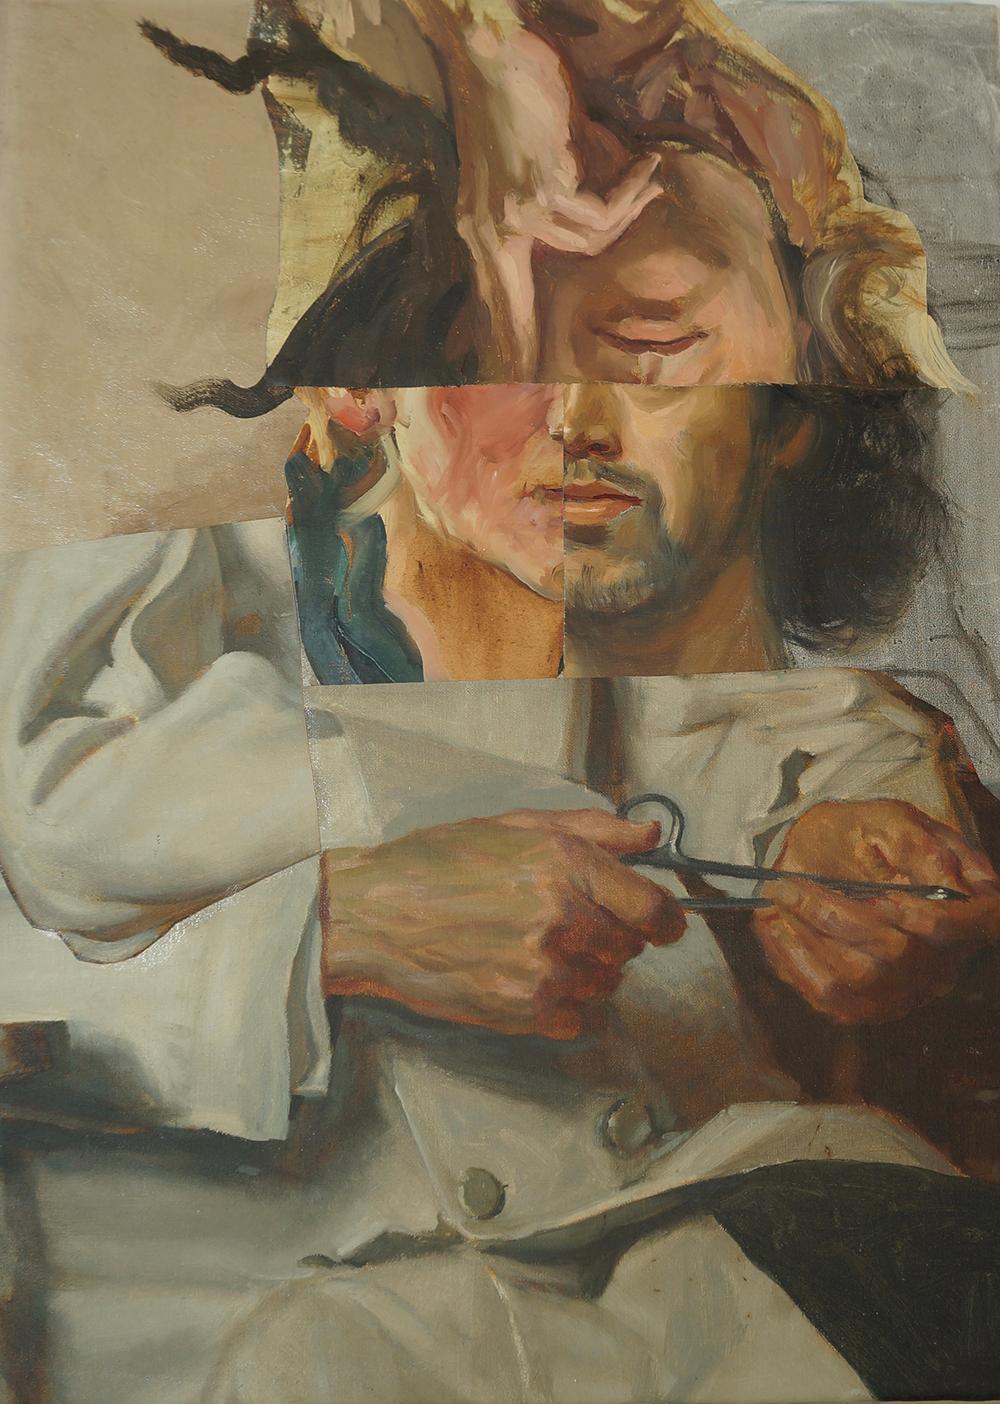 John Baker Figurative Painting - "Blind Surgeon", portrait, acrylic, collage, greys, mixed media painting